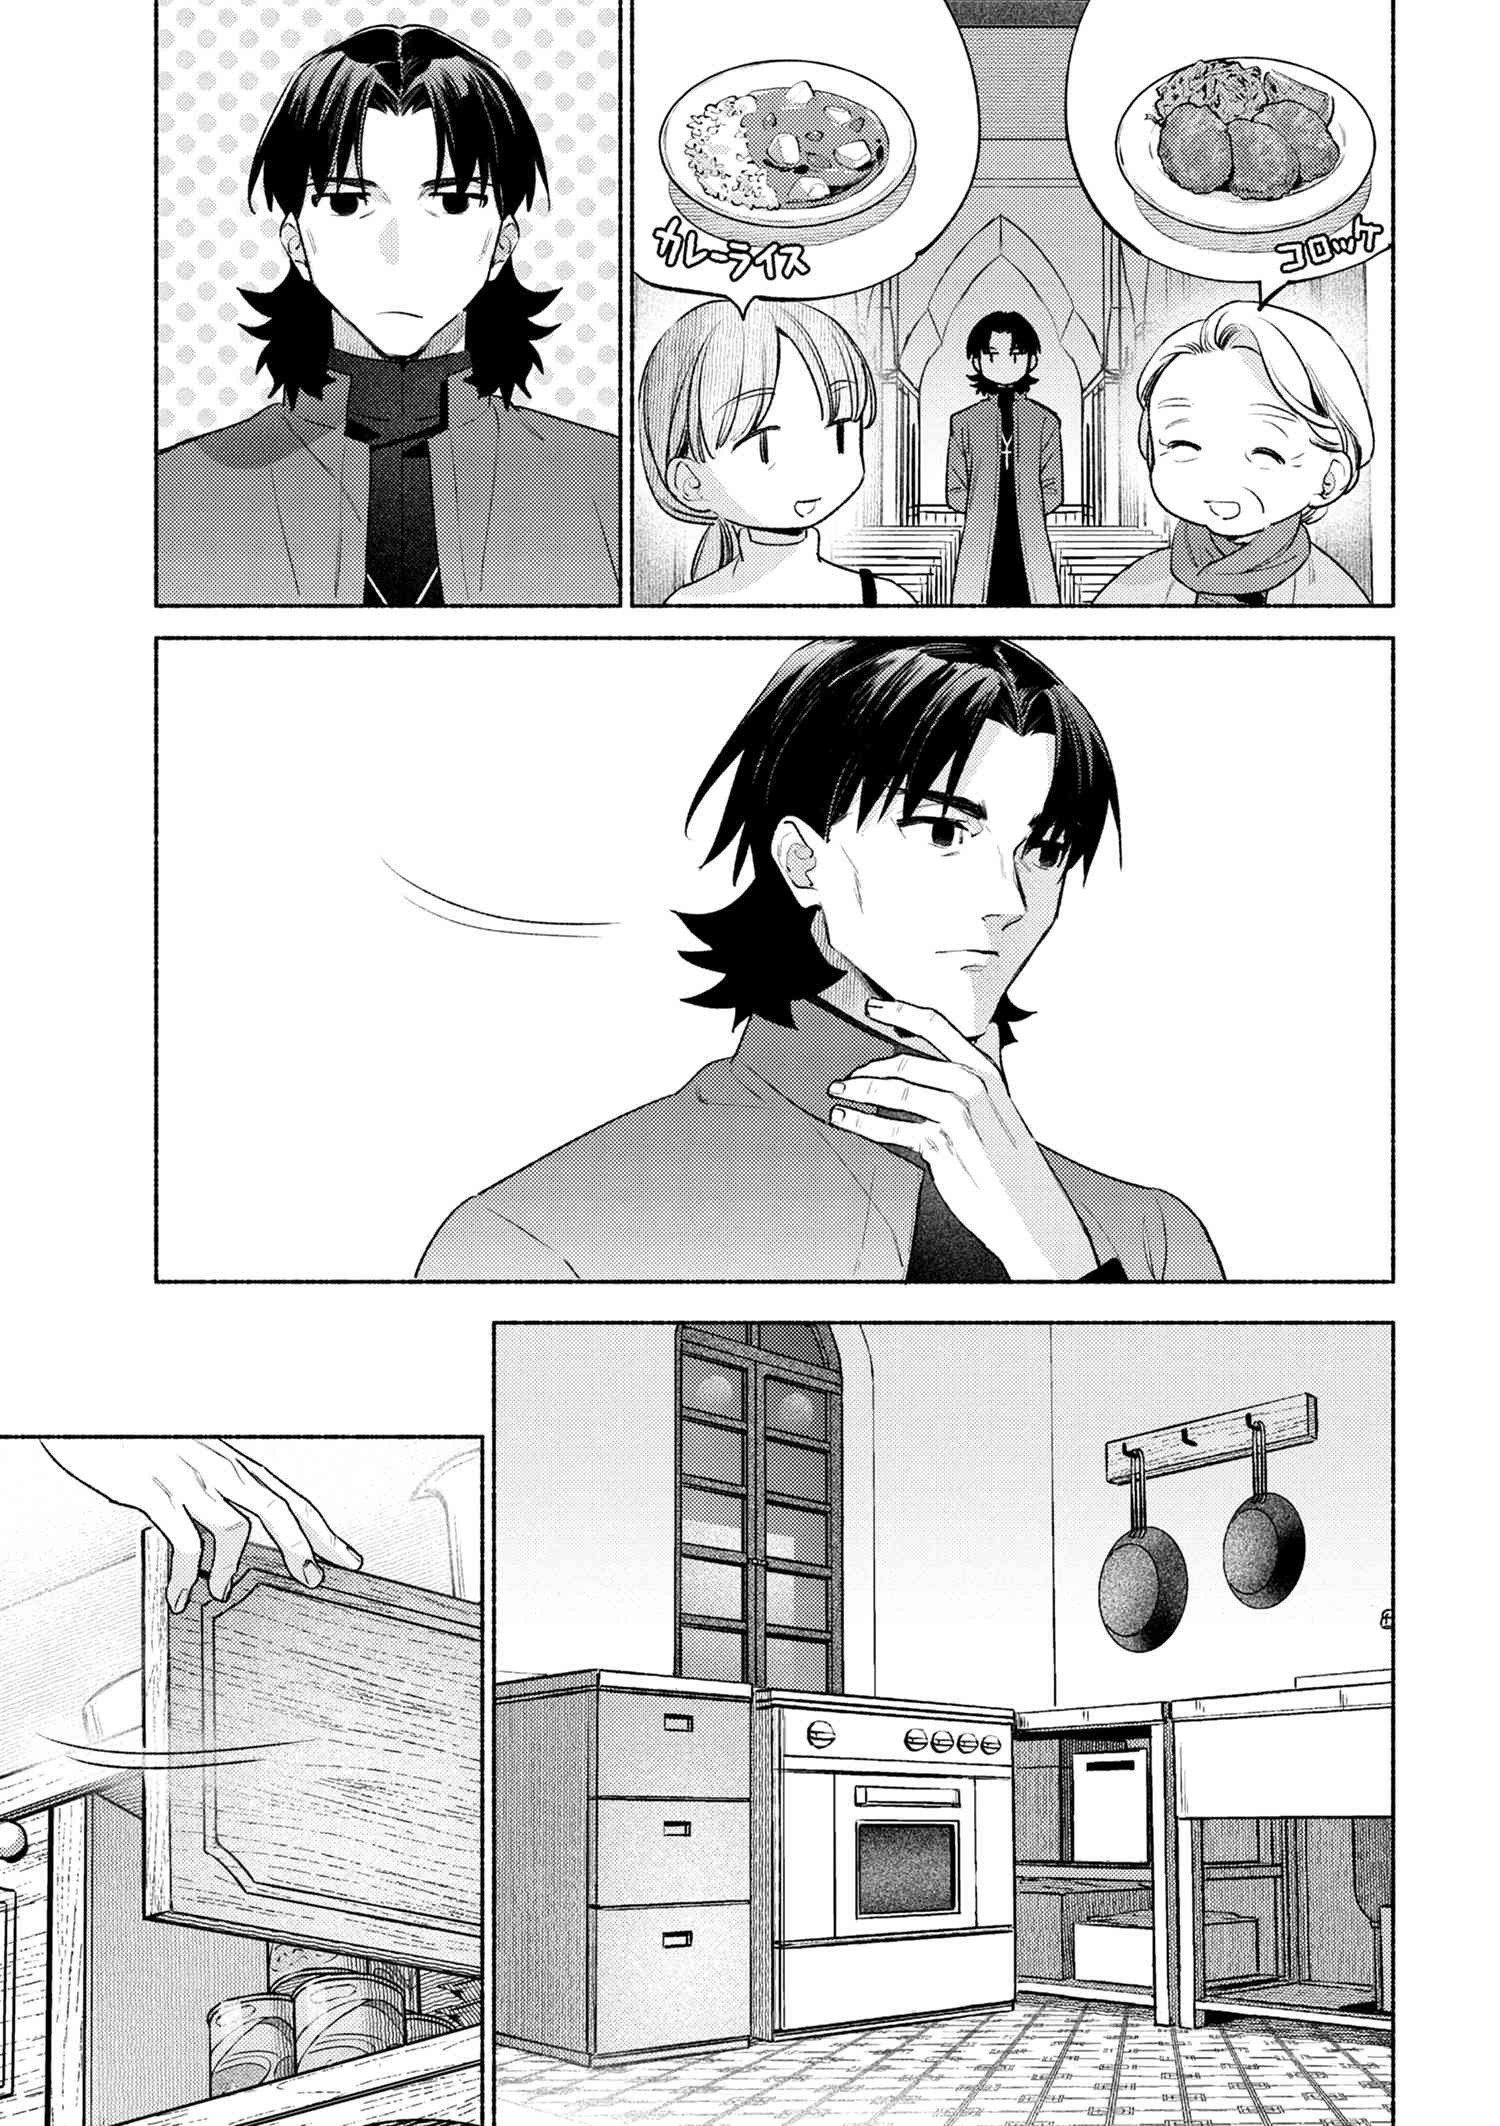 Emiya-san Chi no Kyou no Gohan - Chapter 55.5 - Page 7